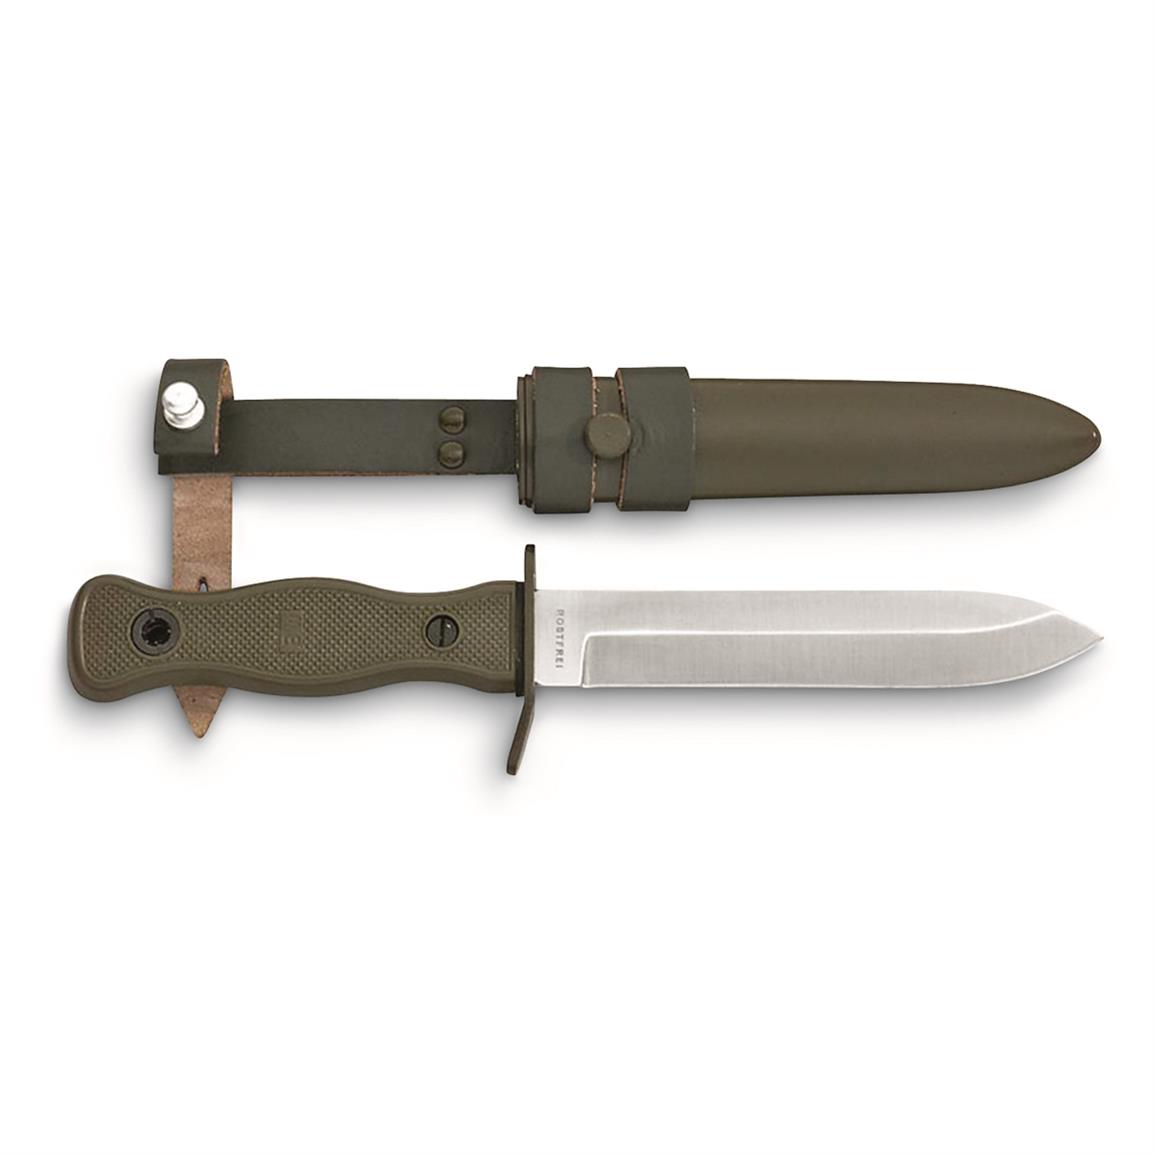 German Military Surplus Combat Knife With Sheath, Od Green, New - 689628, Military Grade Pocket ...